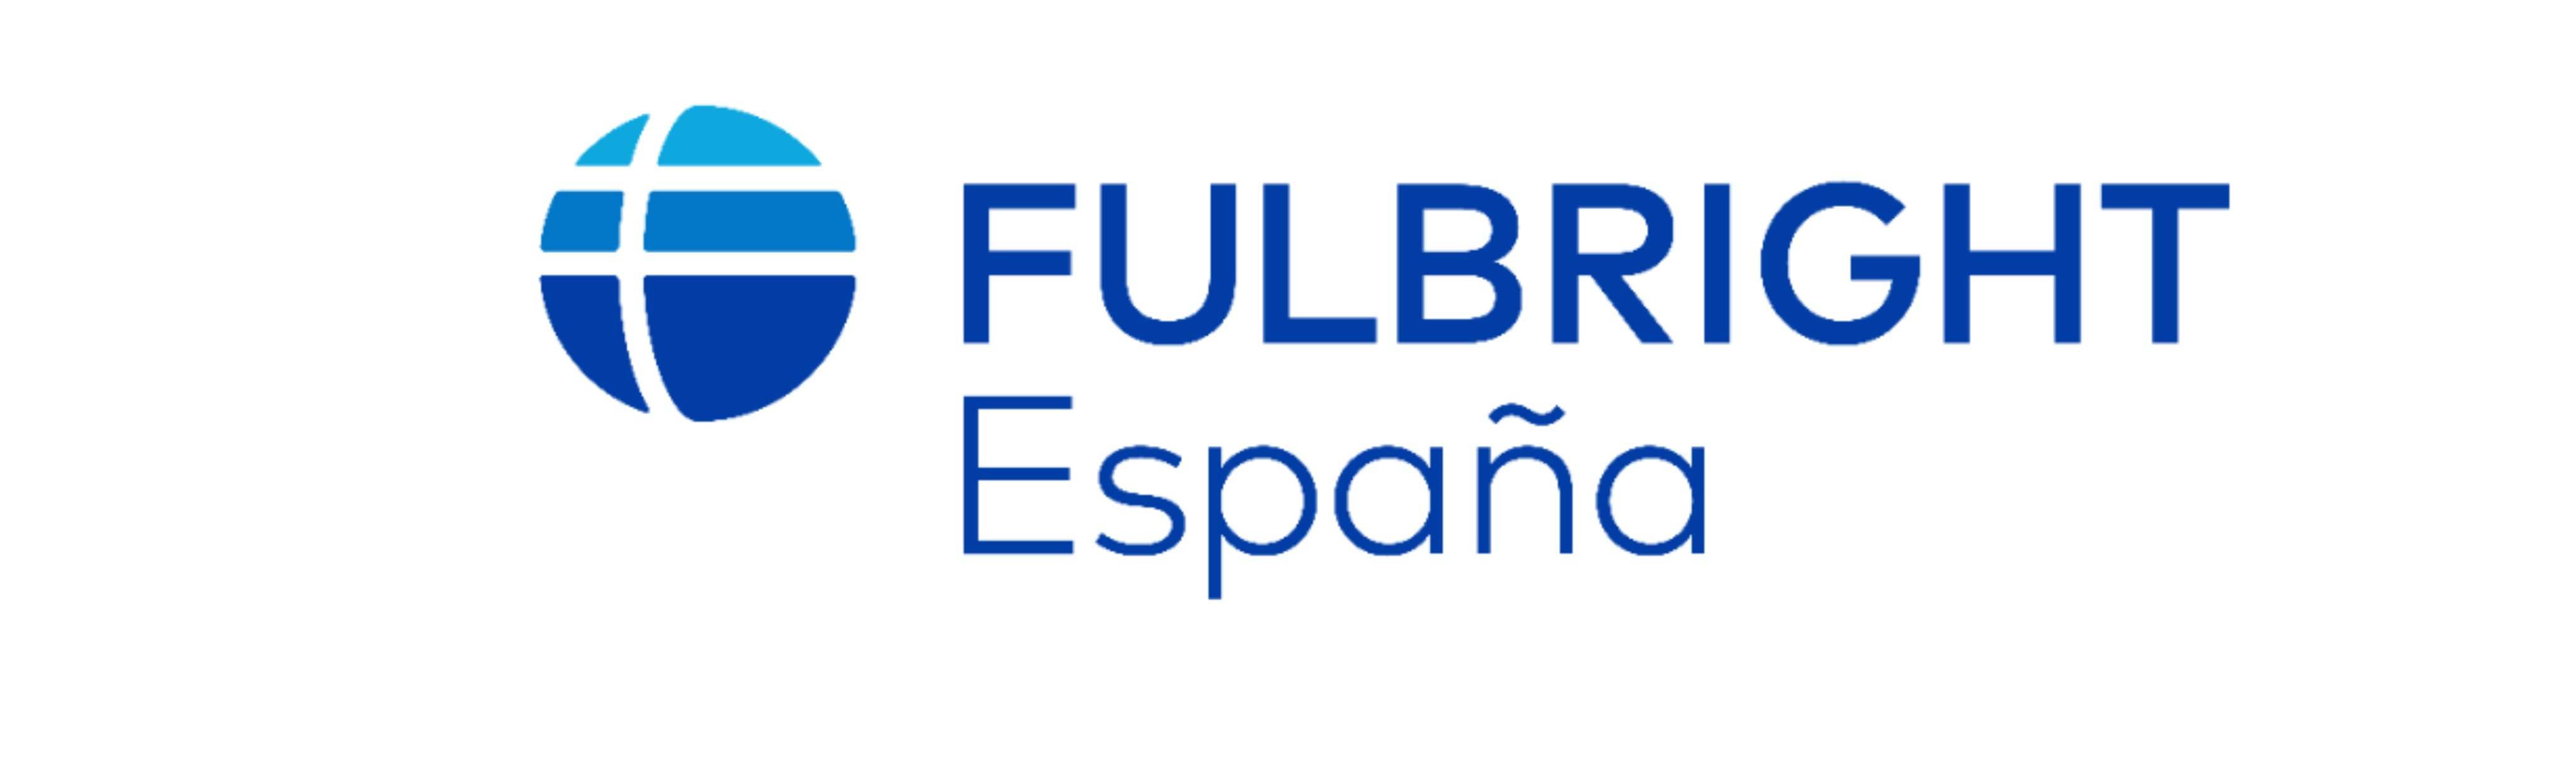 Fullbright españa